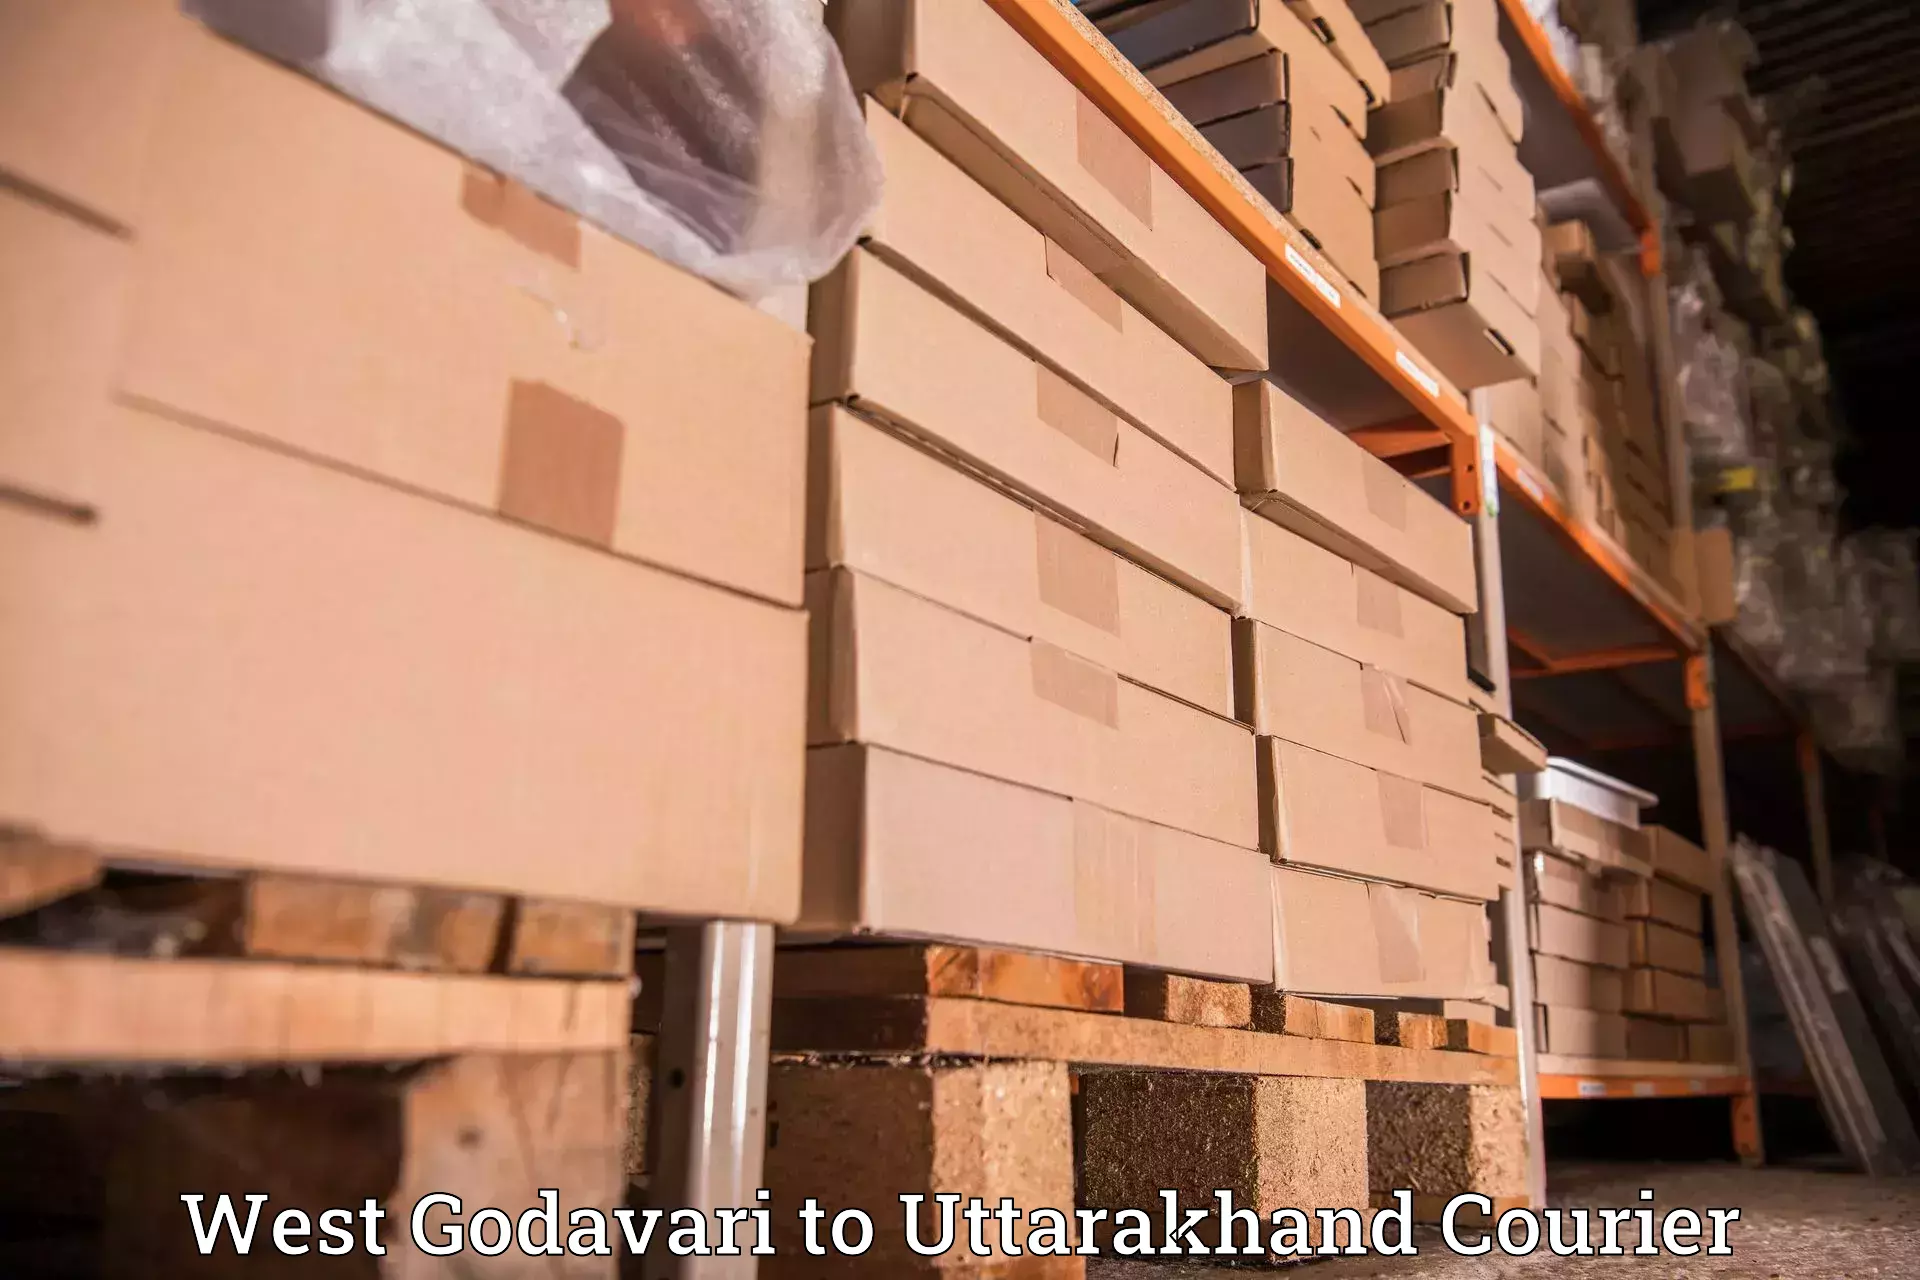 Courier service efficiency West Godavari to Herbertpur